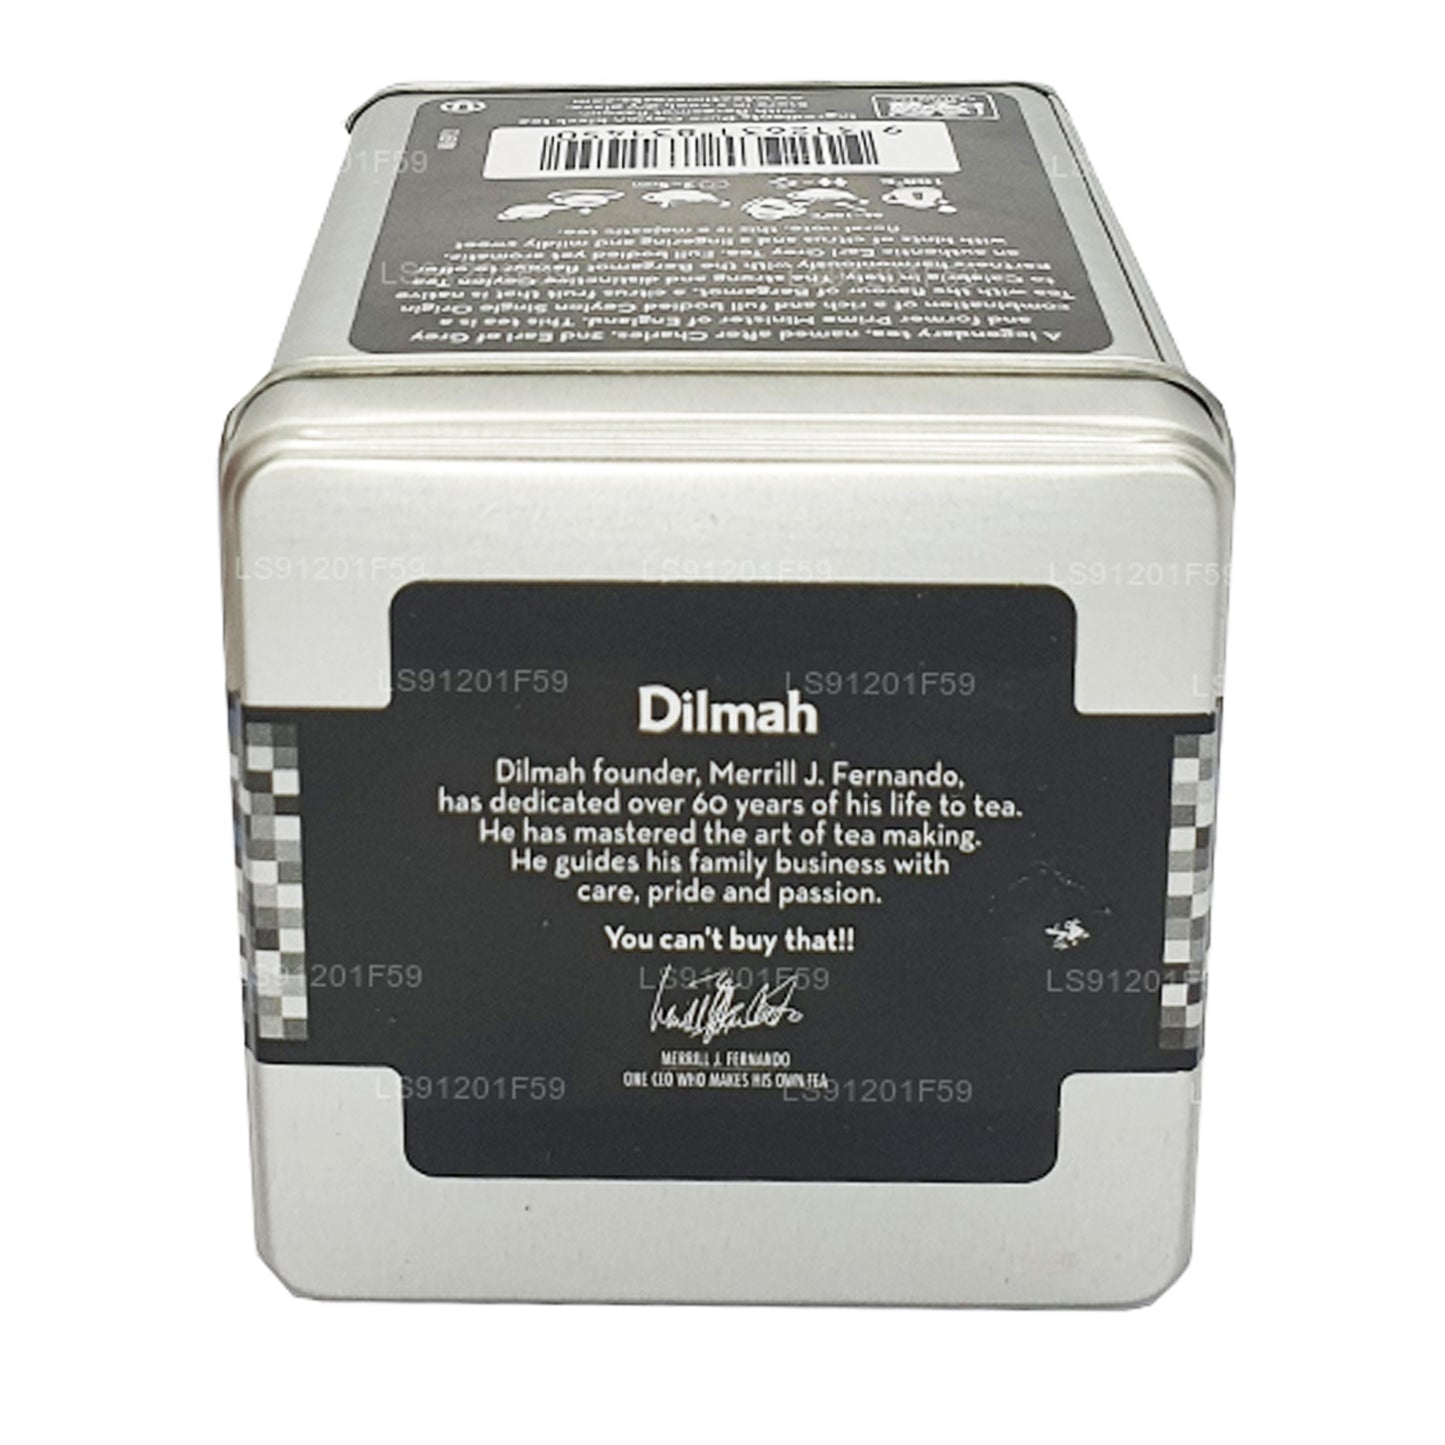 Dilmah t-Series The Original Earl Grey Loose Leaf Tea (100g)